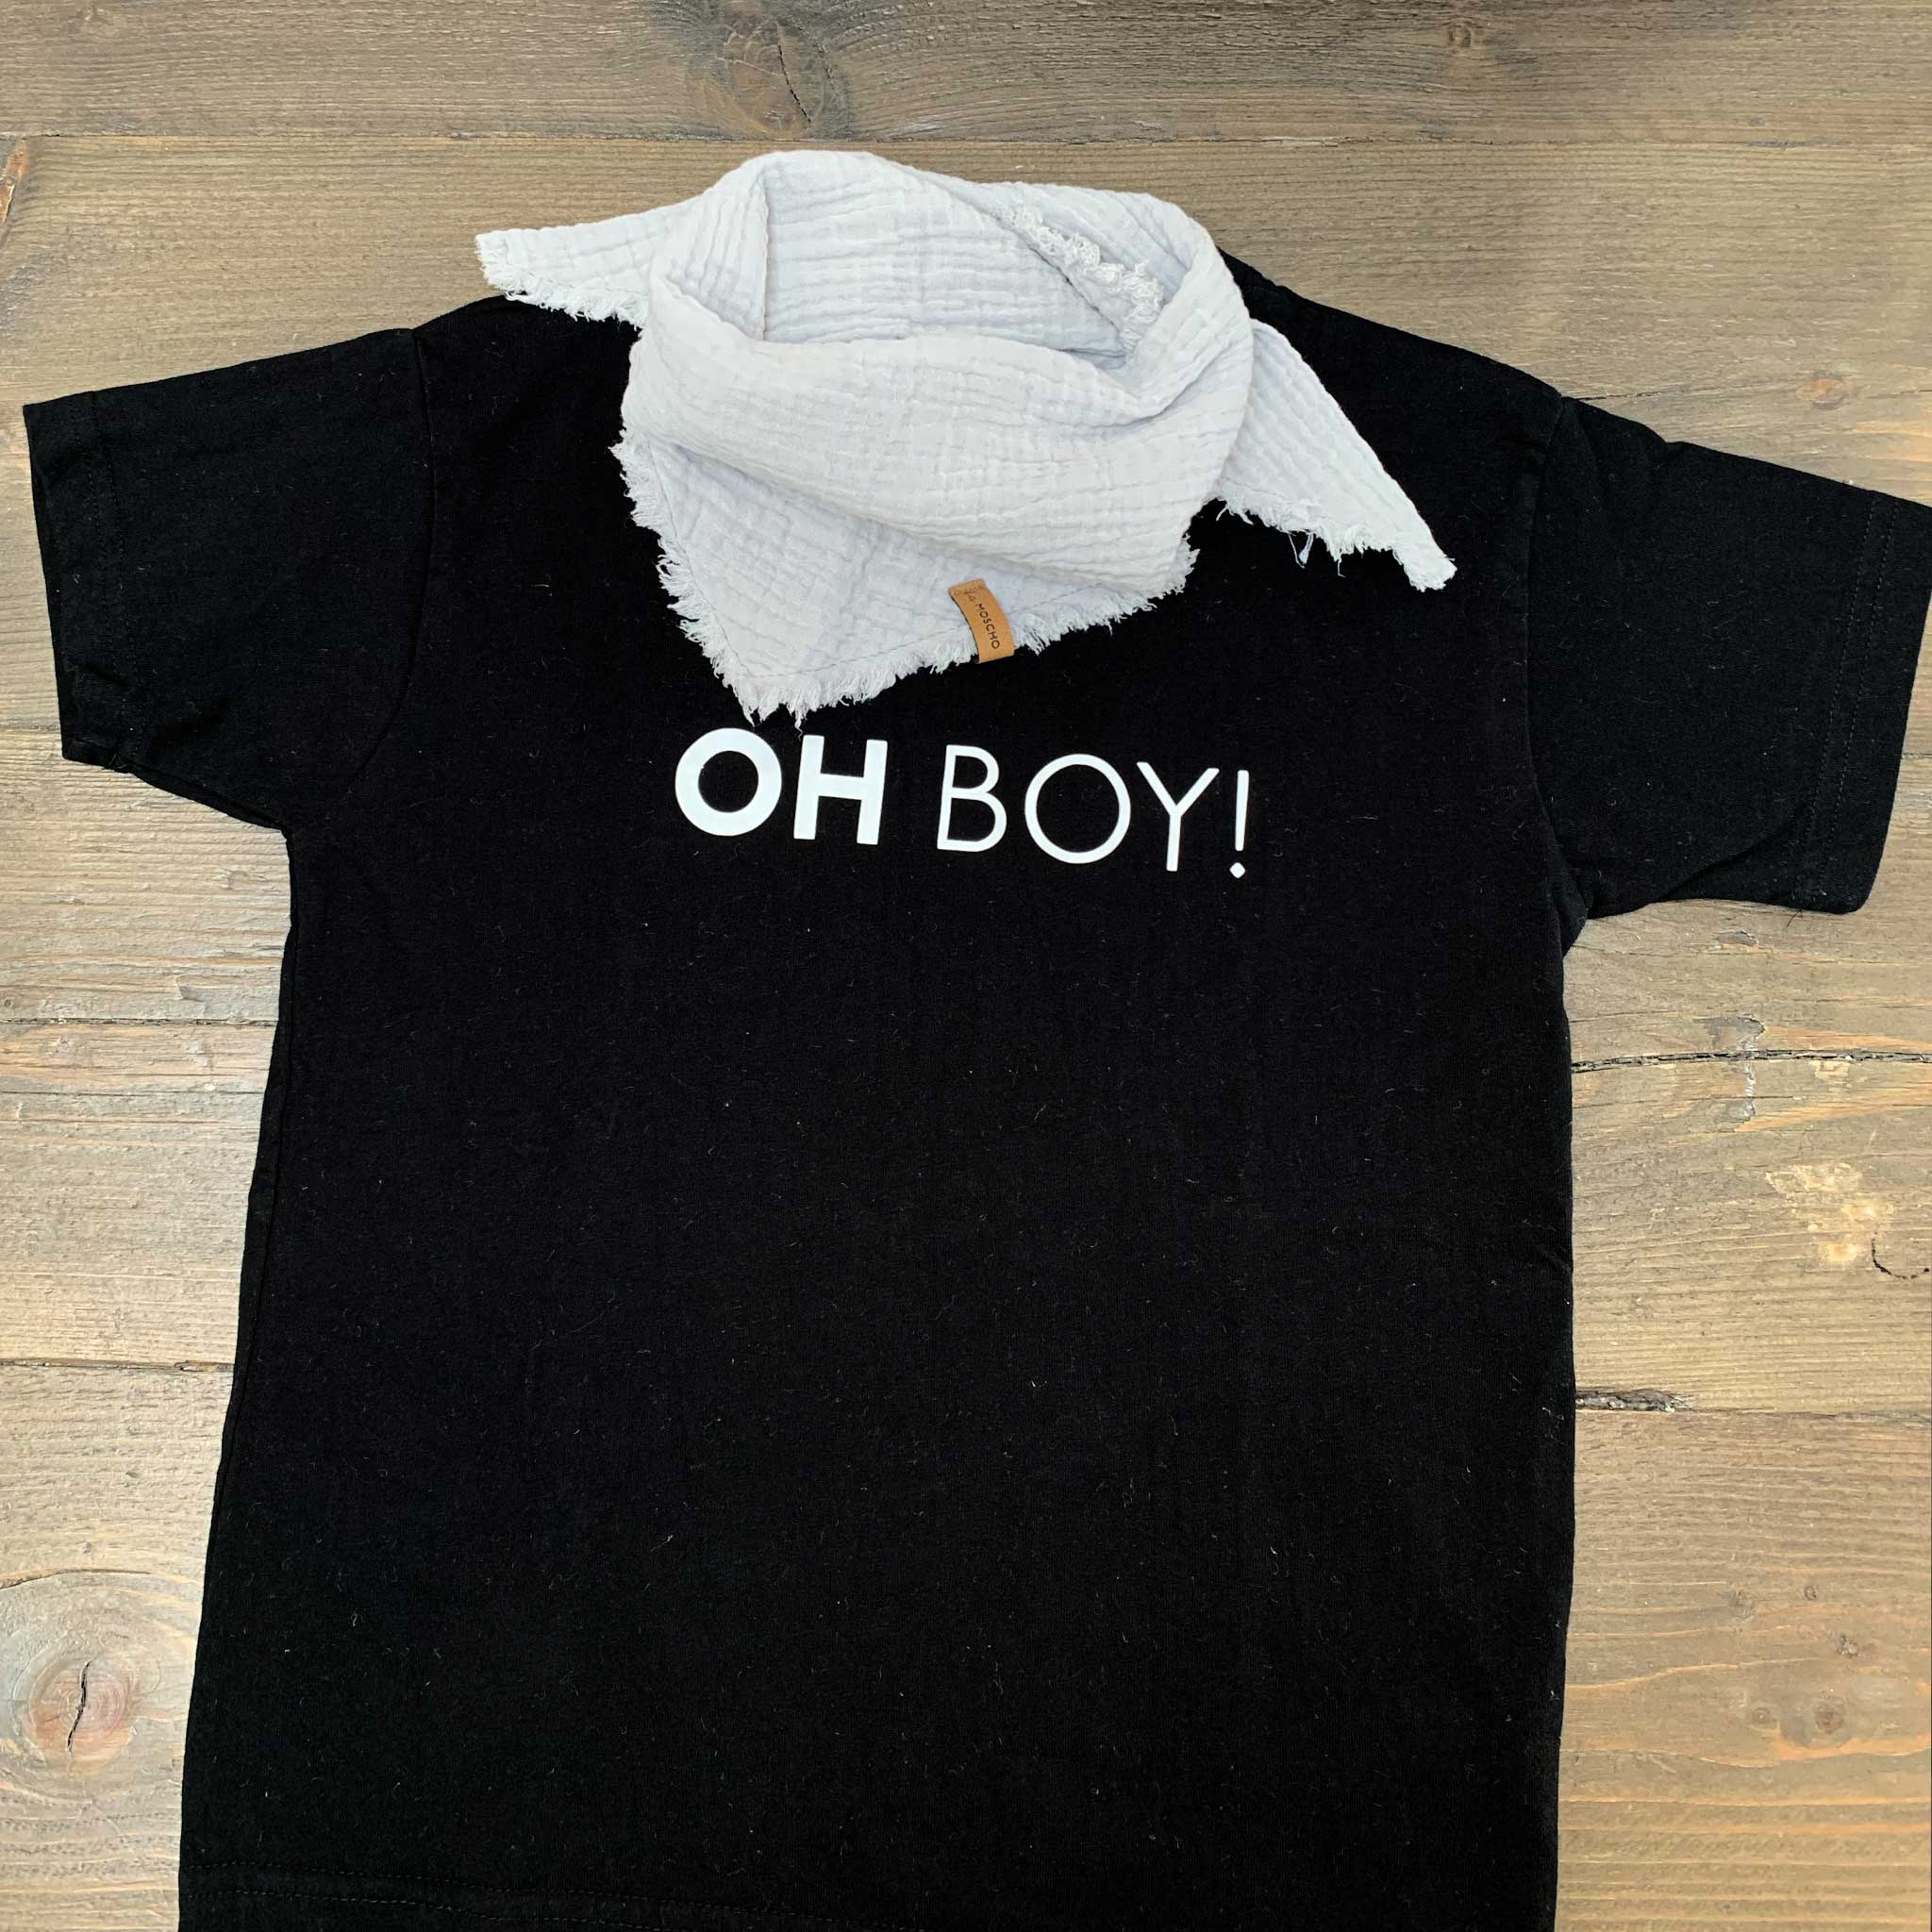 T-Shirt "Oh Boy" schwarz